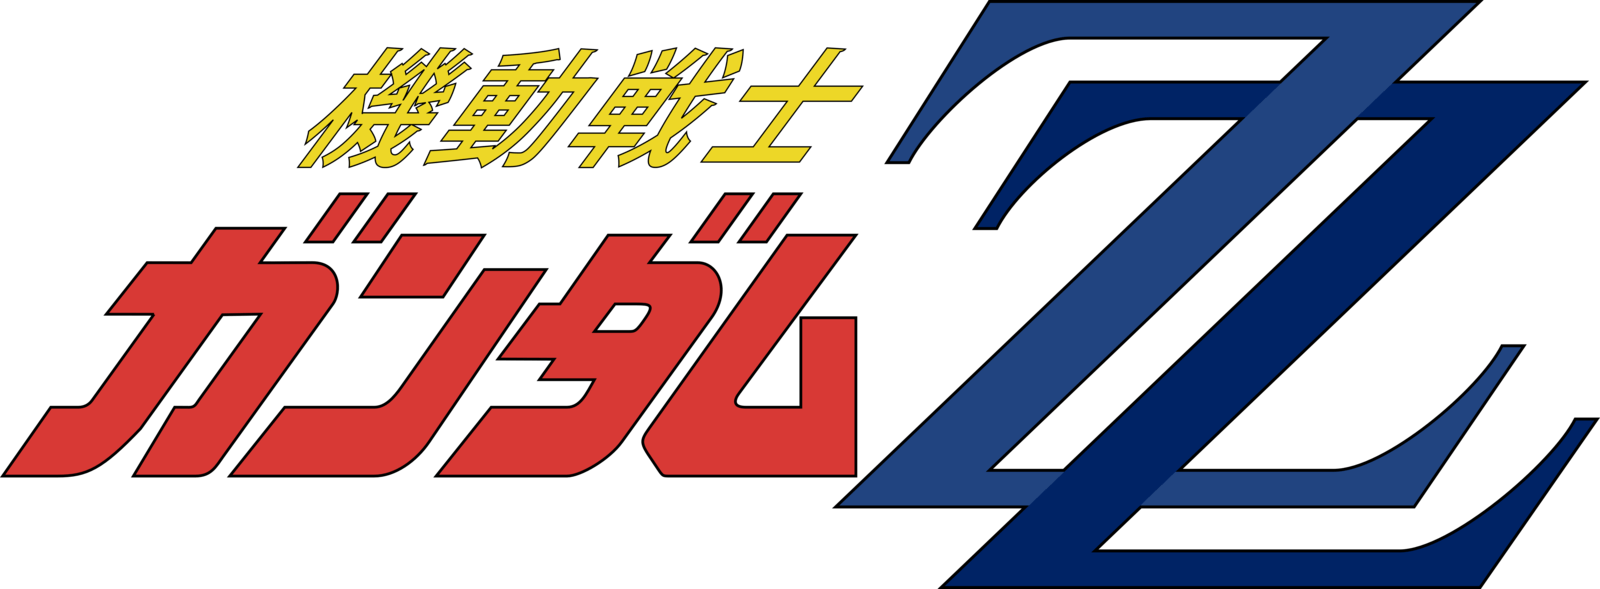 Double ZZ Logo - Zz Logos